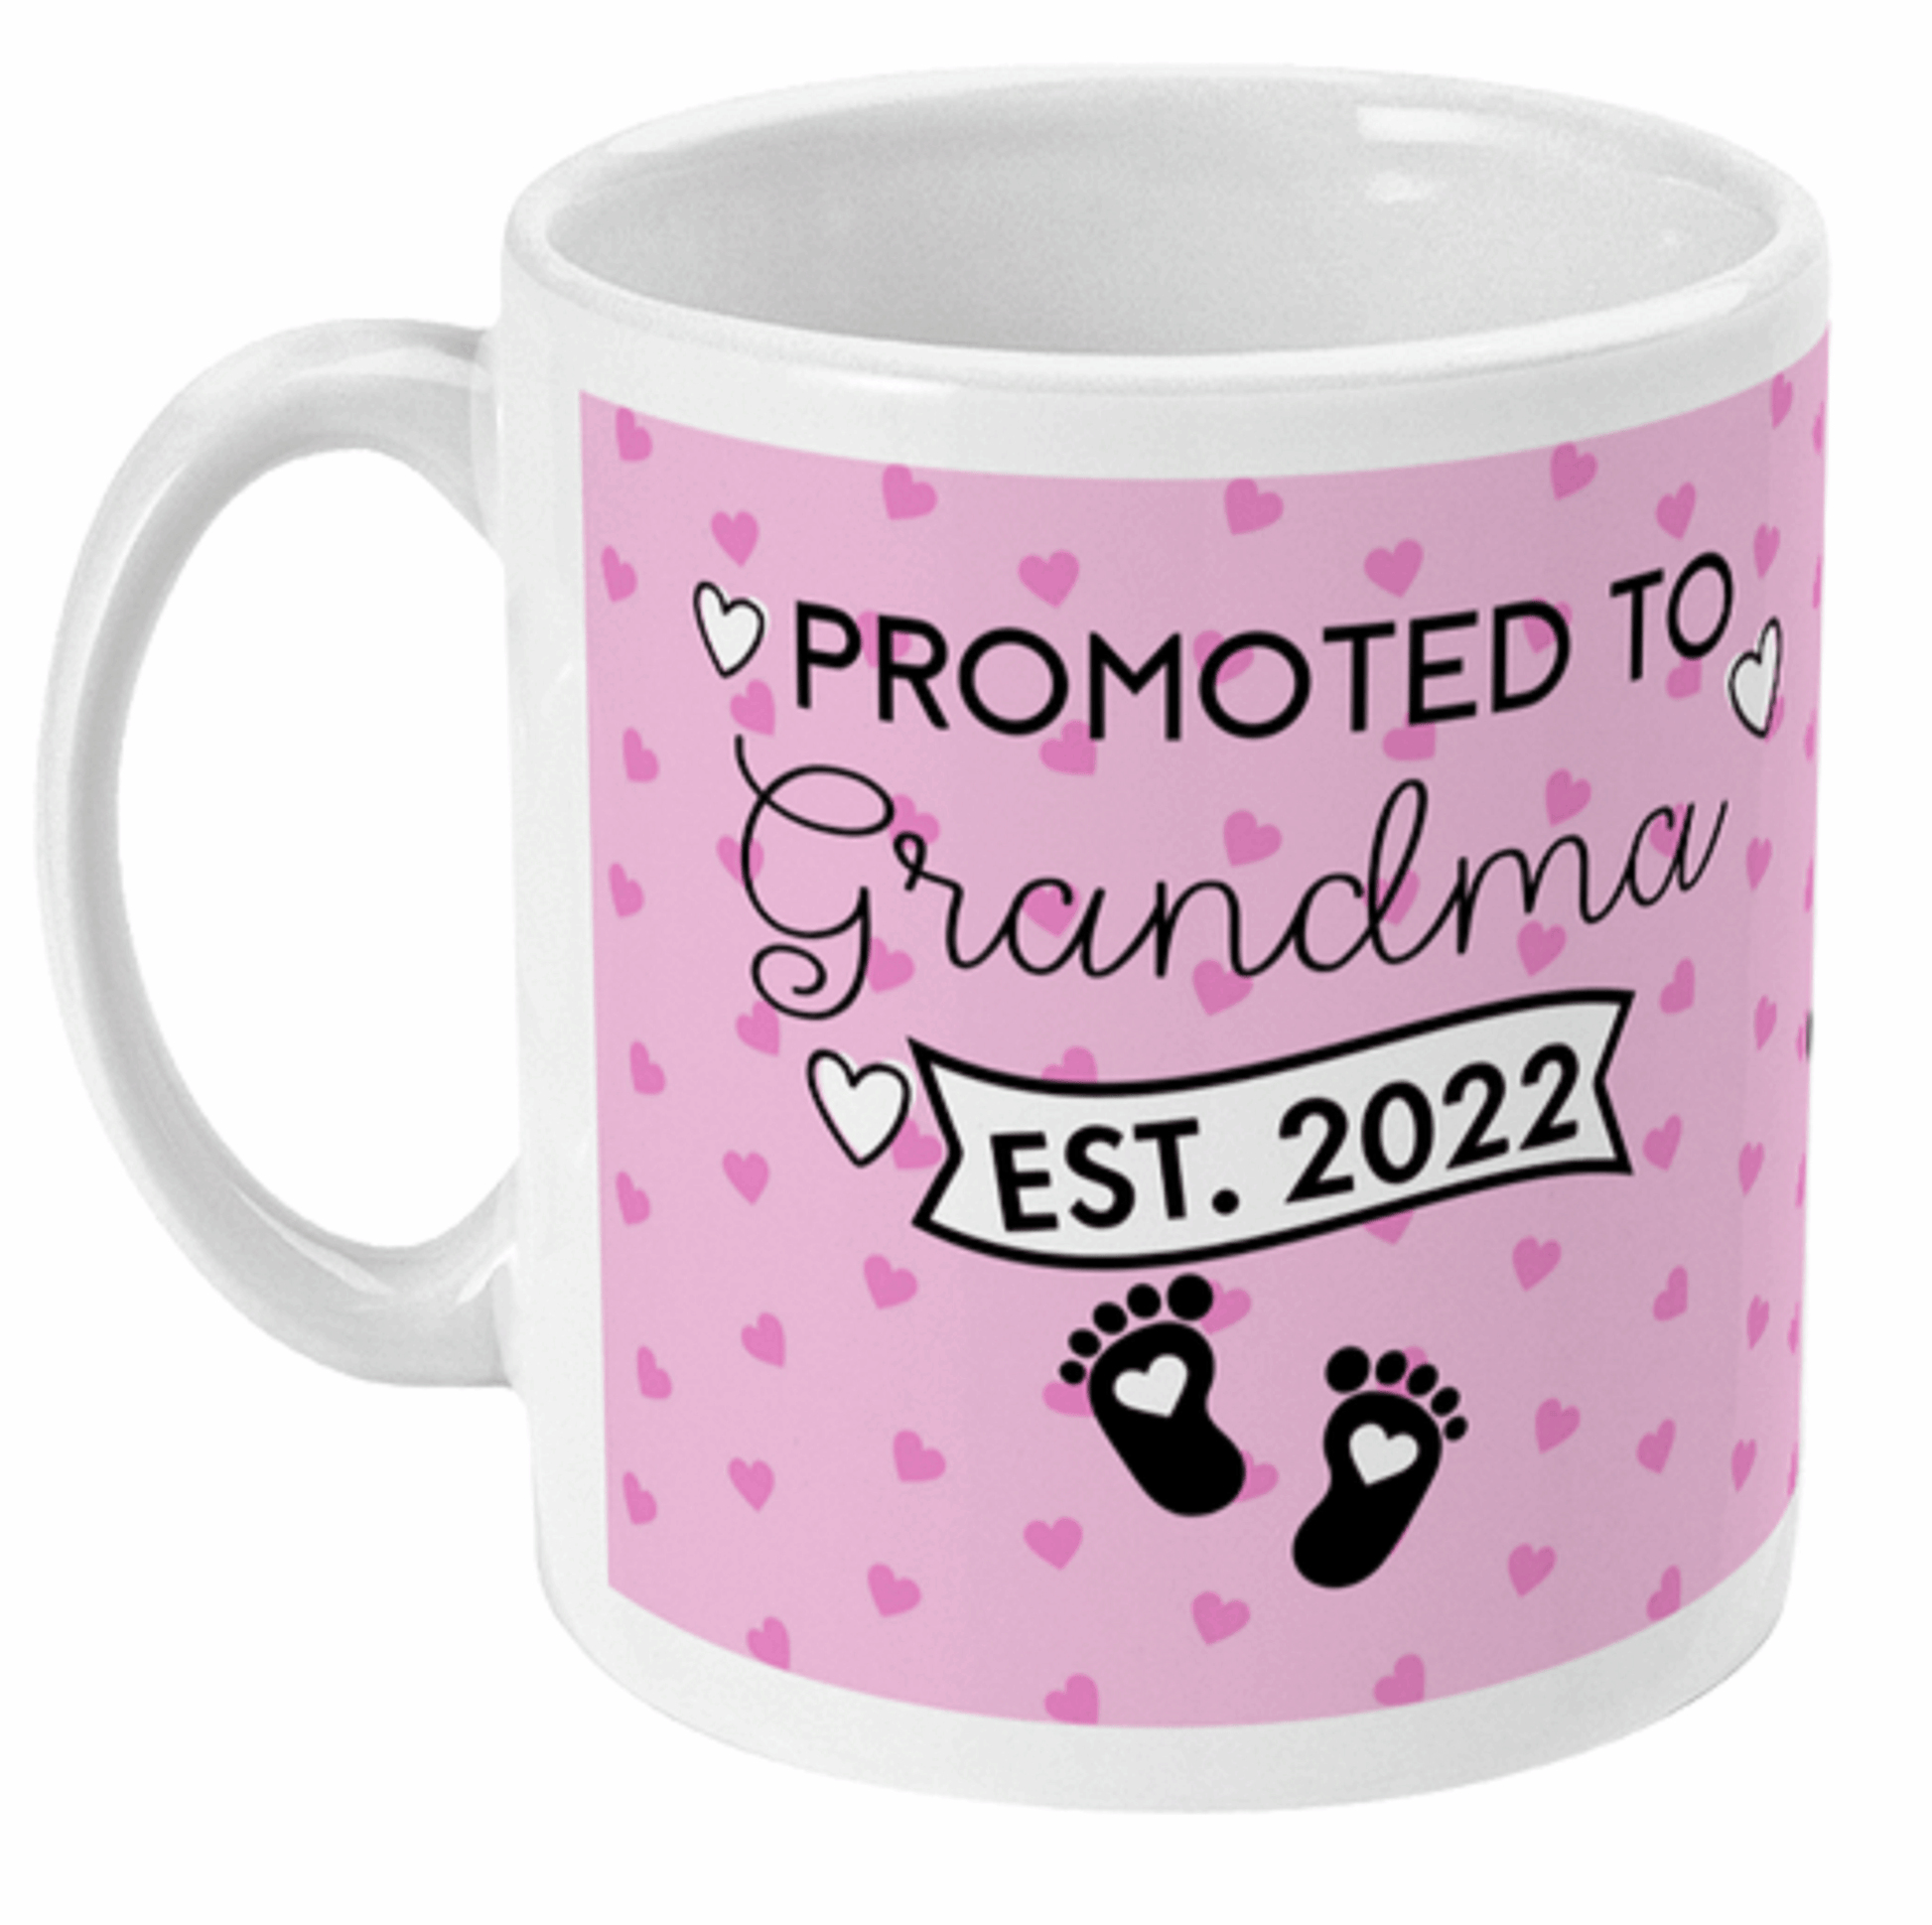  Promoted to Grandma Baby Scan Coffee Mug by Free Spirit Accessories sold by Free Spirit Accessories